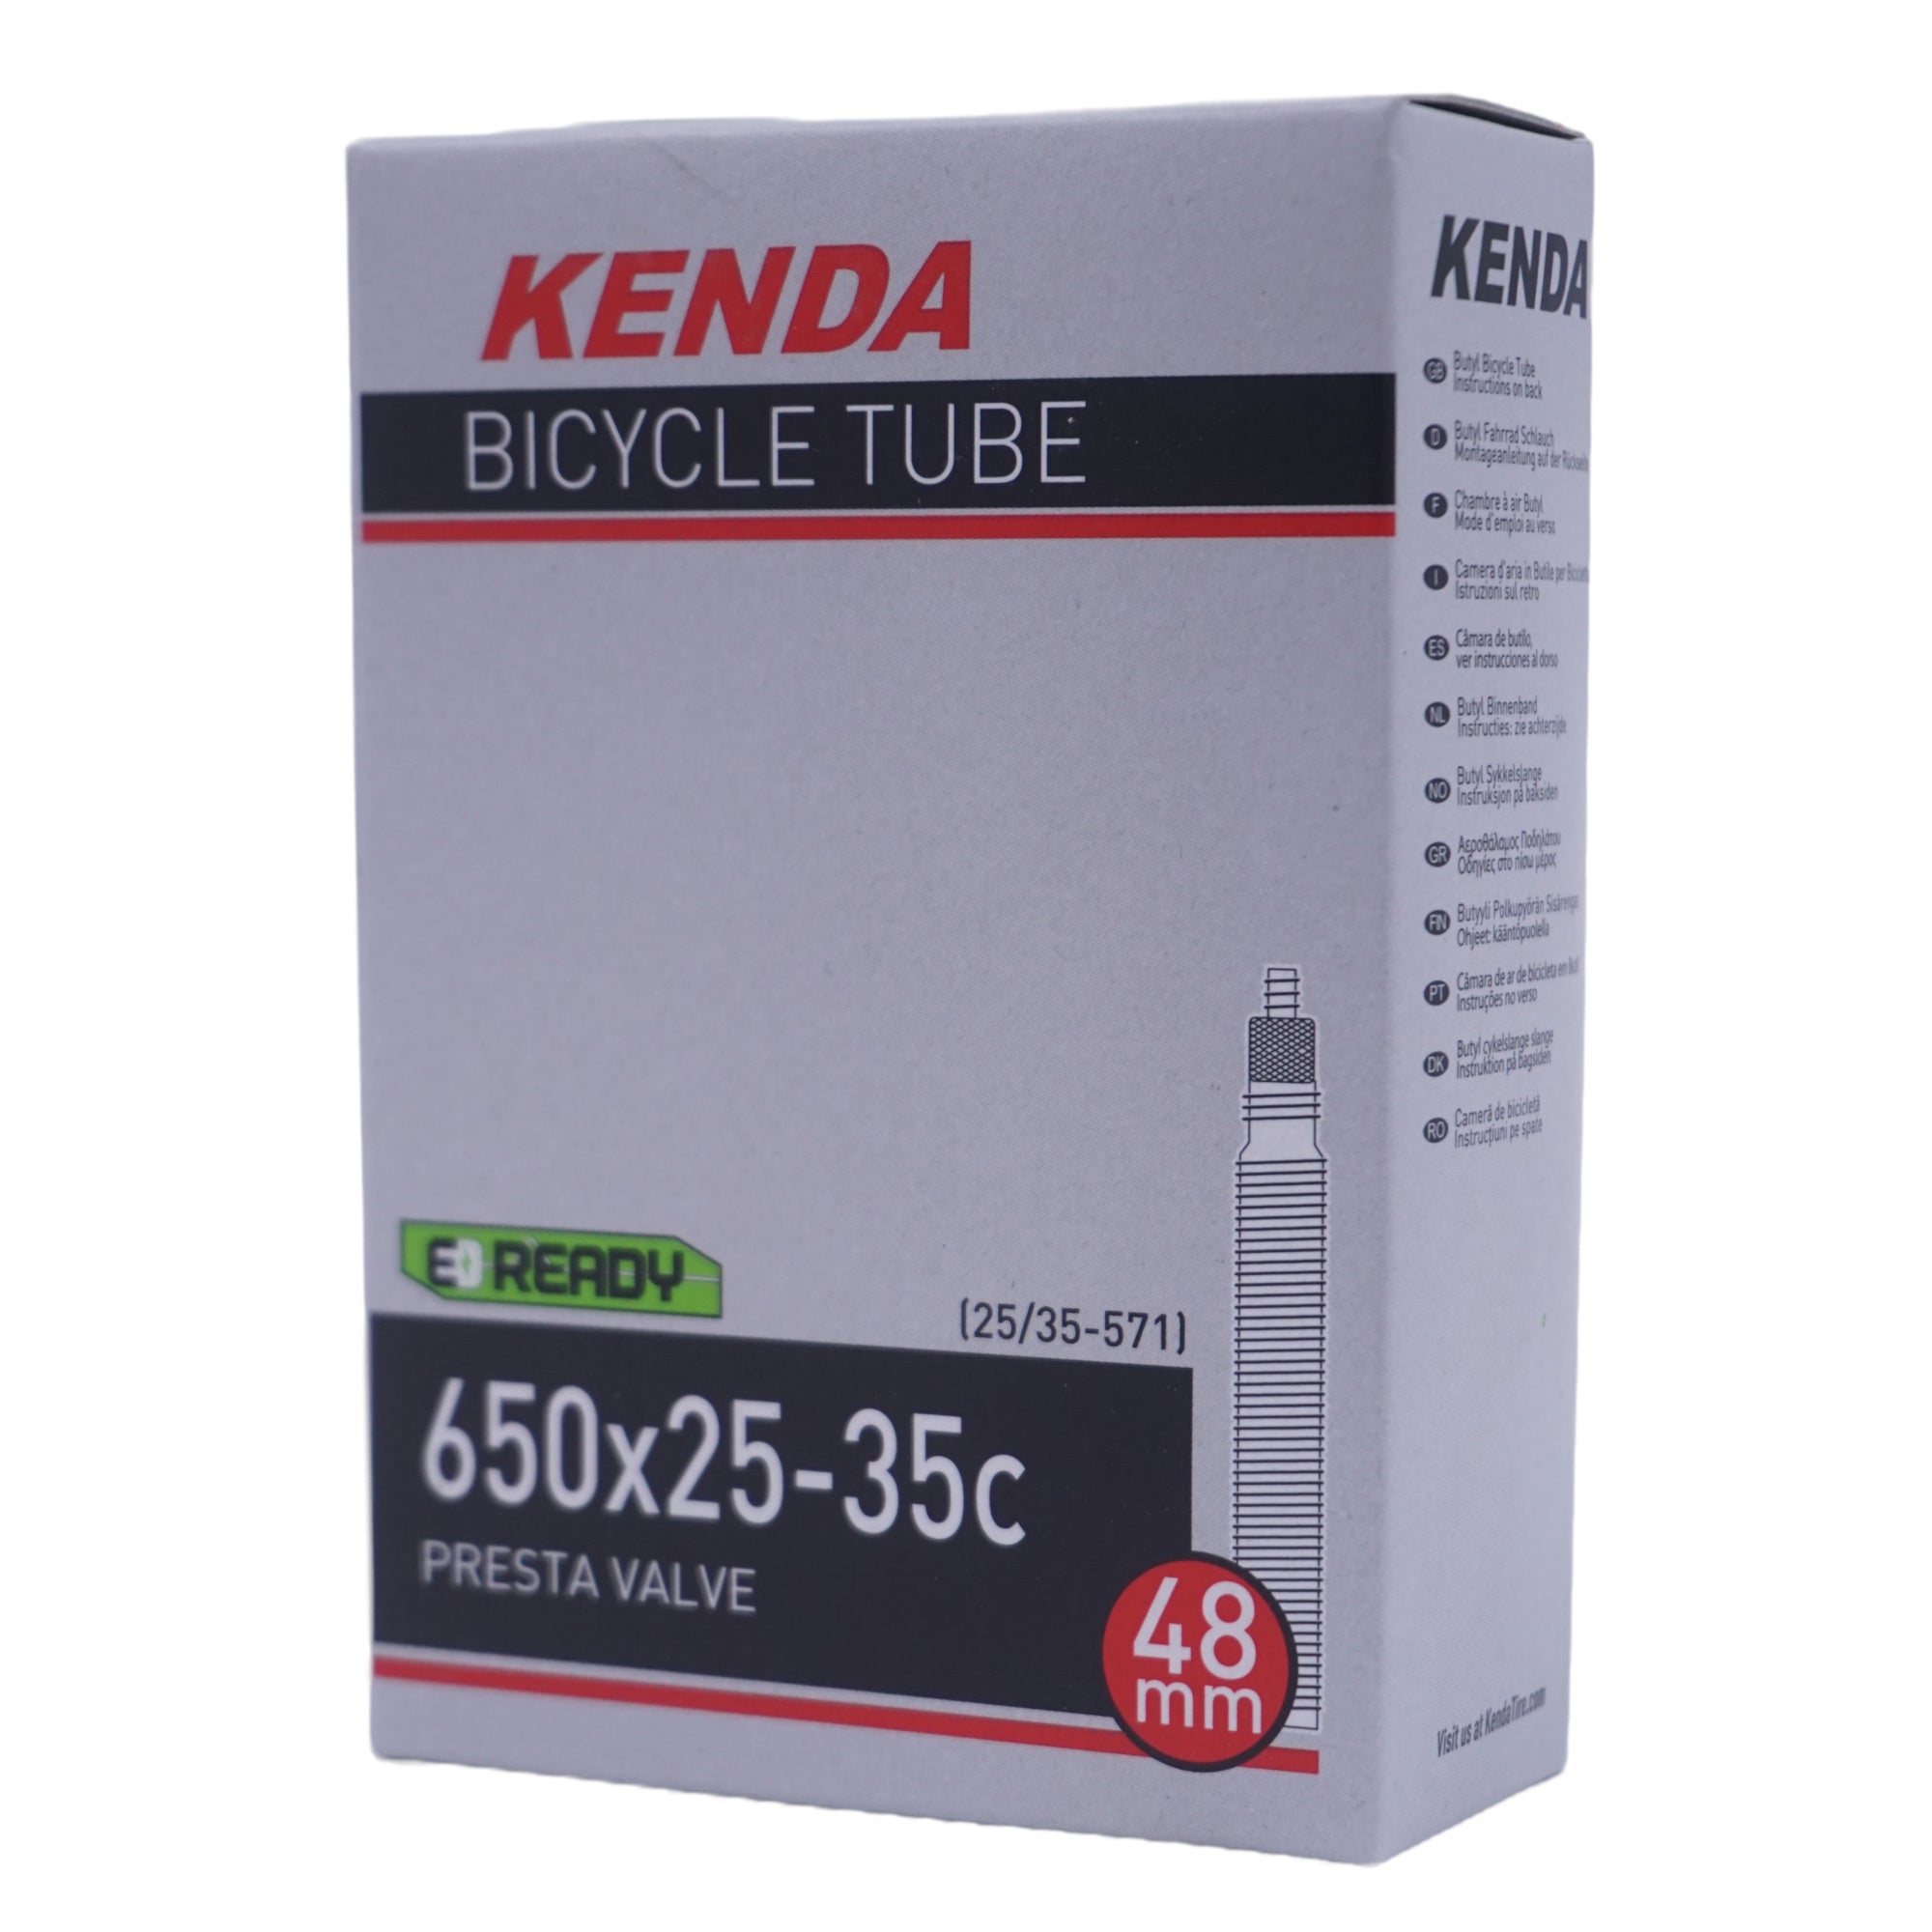 Kenda Bicycle Road Tube 650x25-35c 48mm Presta Valve - The Bikesmiths